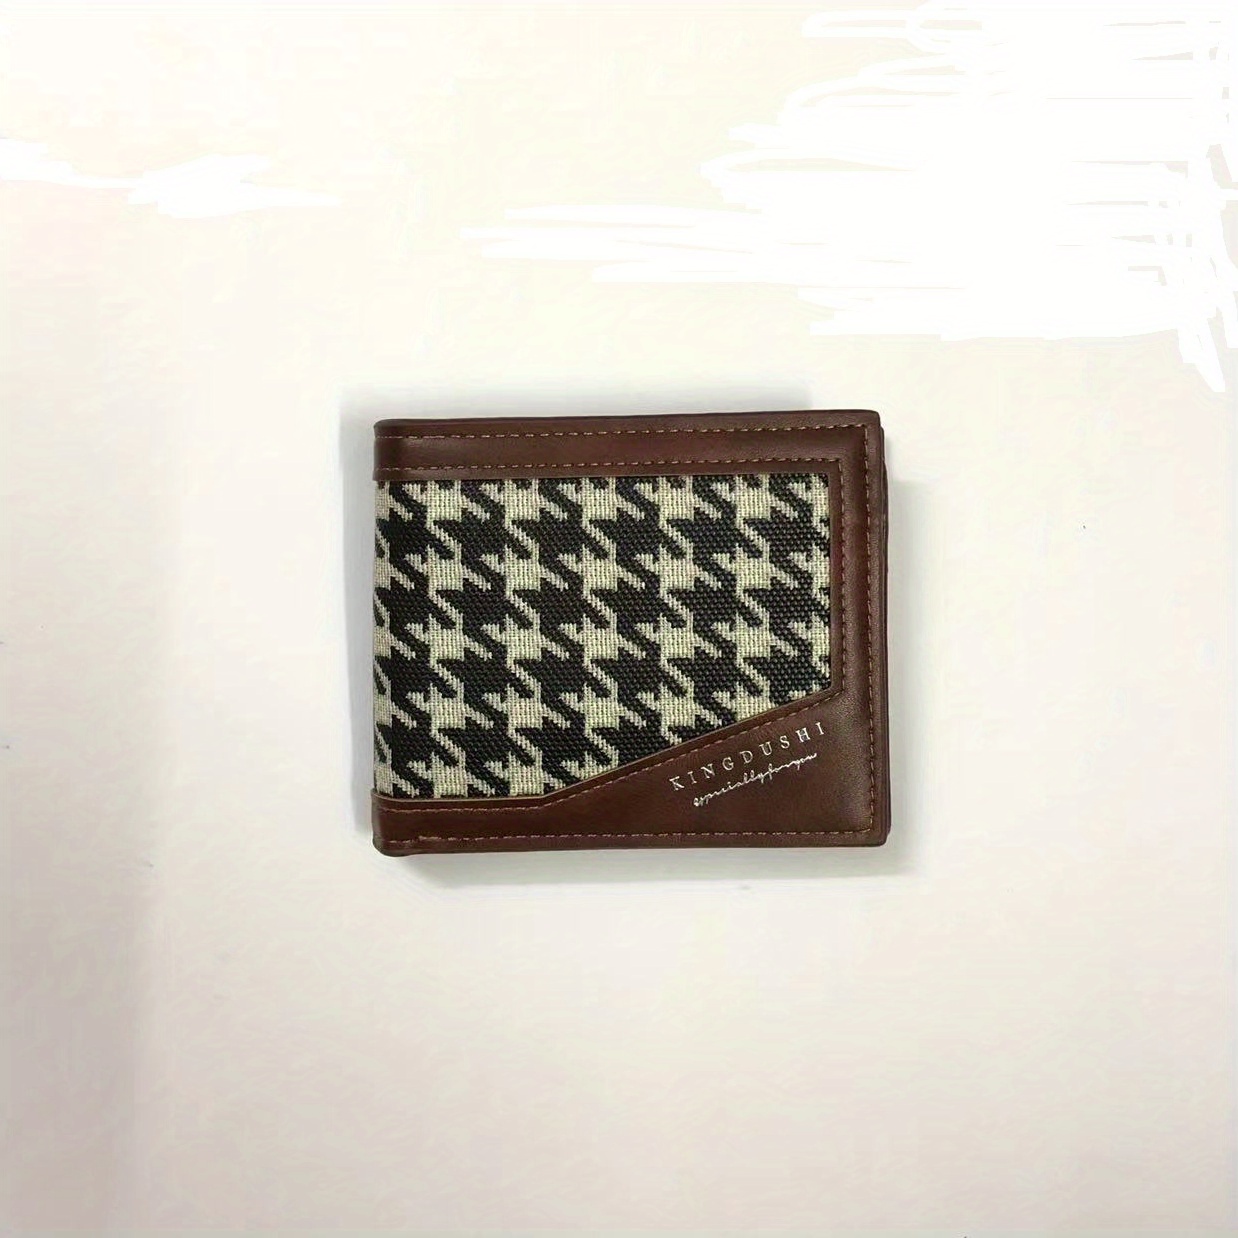 Burberry Black Haymarket Leather Izzy Card Holder